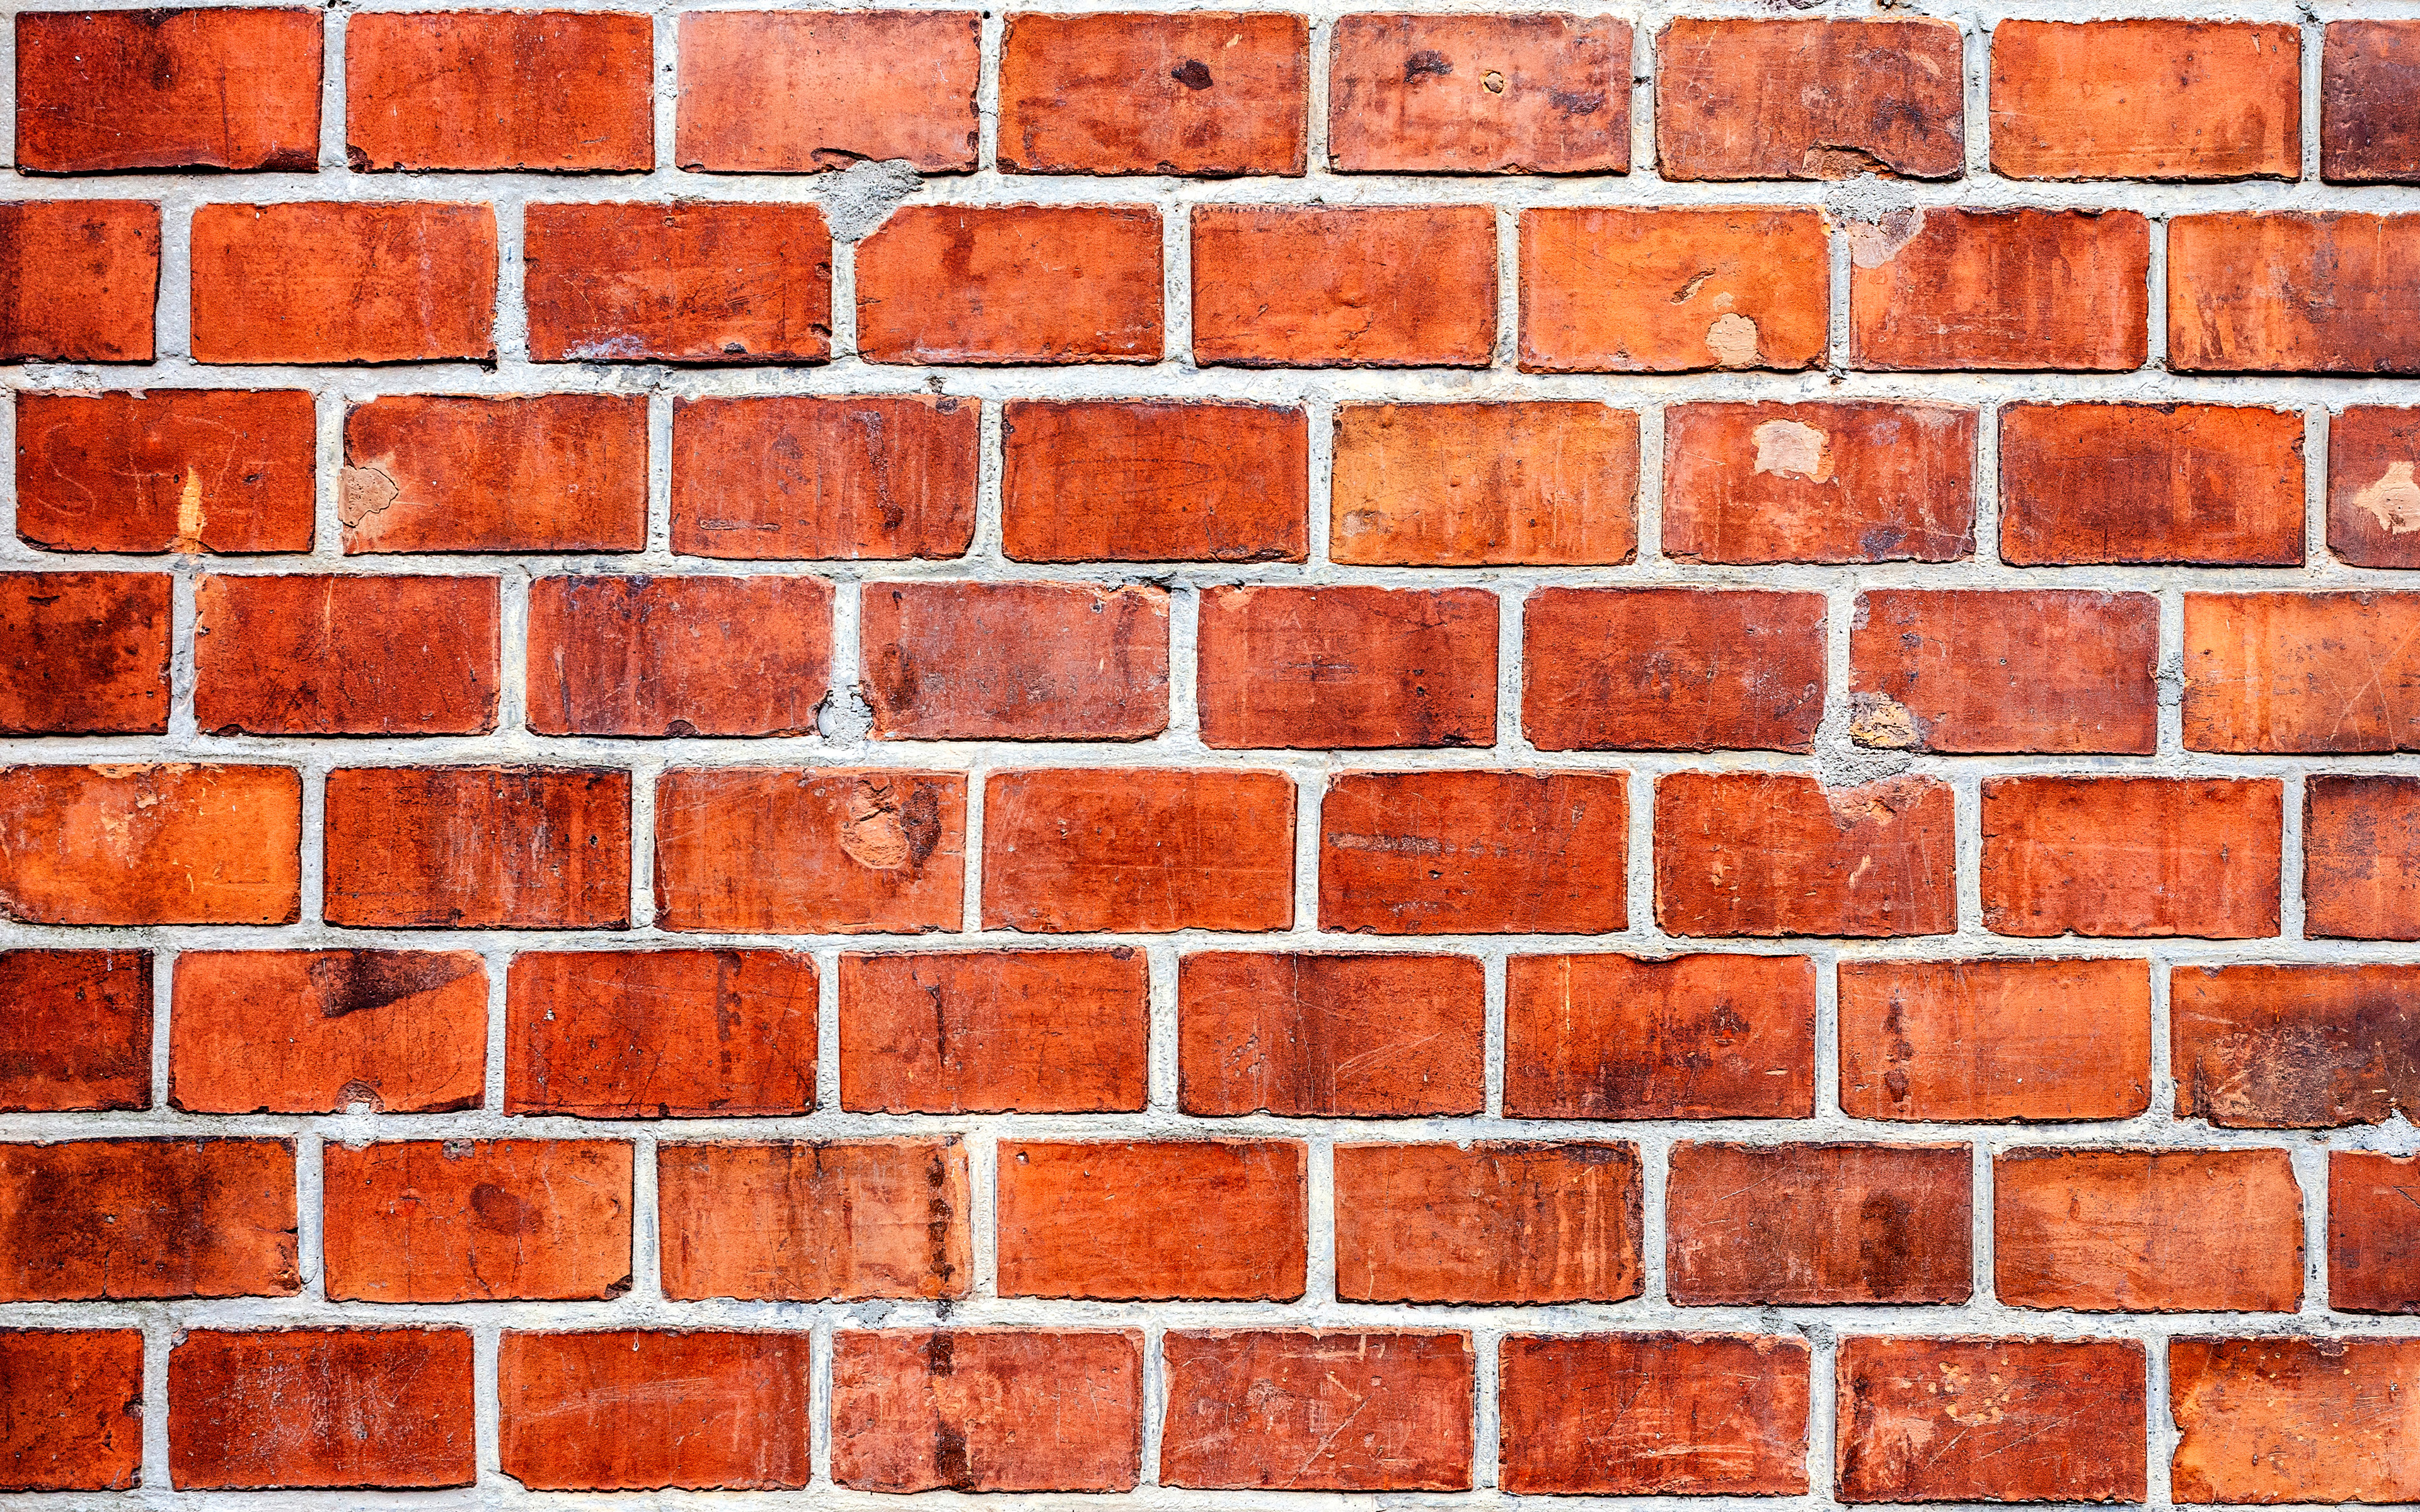 Download Wallpaper Red Bricks Background, 4k, Close Up, Red Bricks, Red Brickwall, Bricks Textures, Brick Wall, Bricks, Wall, Bricks Background, Red Stone Background, Identical Bricks For Desktop With Resolution 3840x2400. High Quality HD